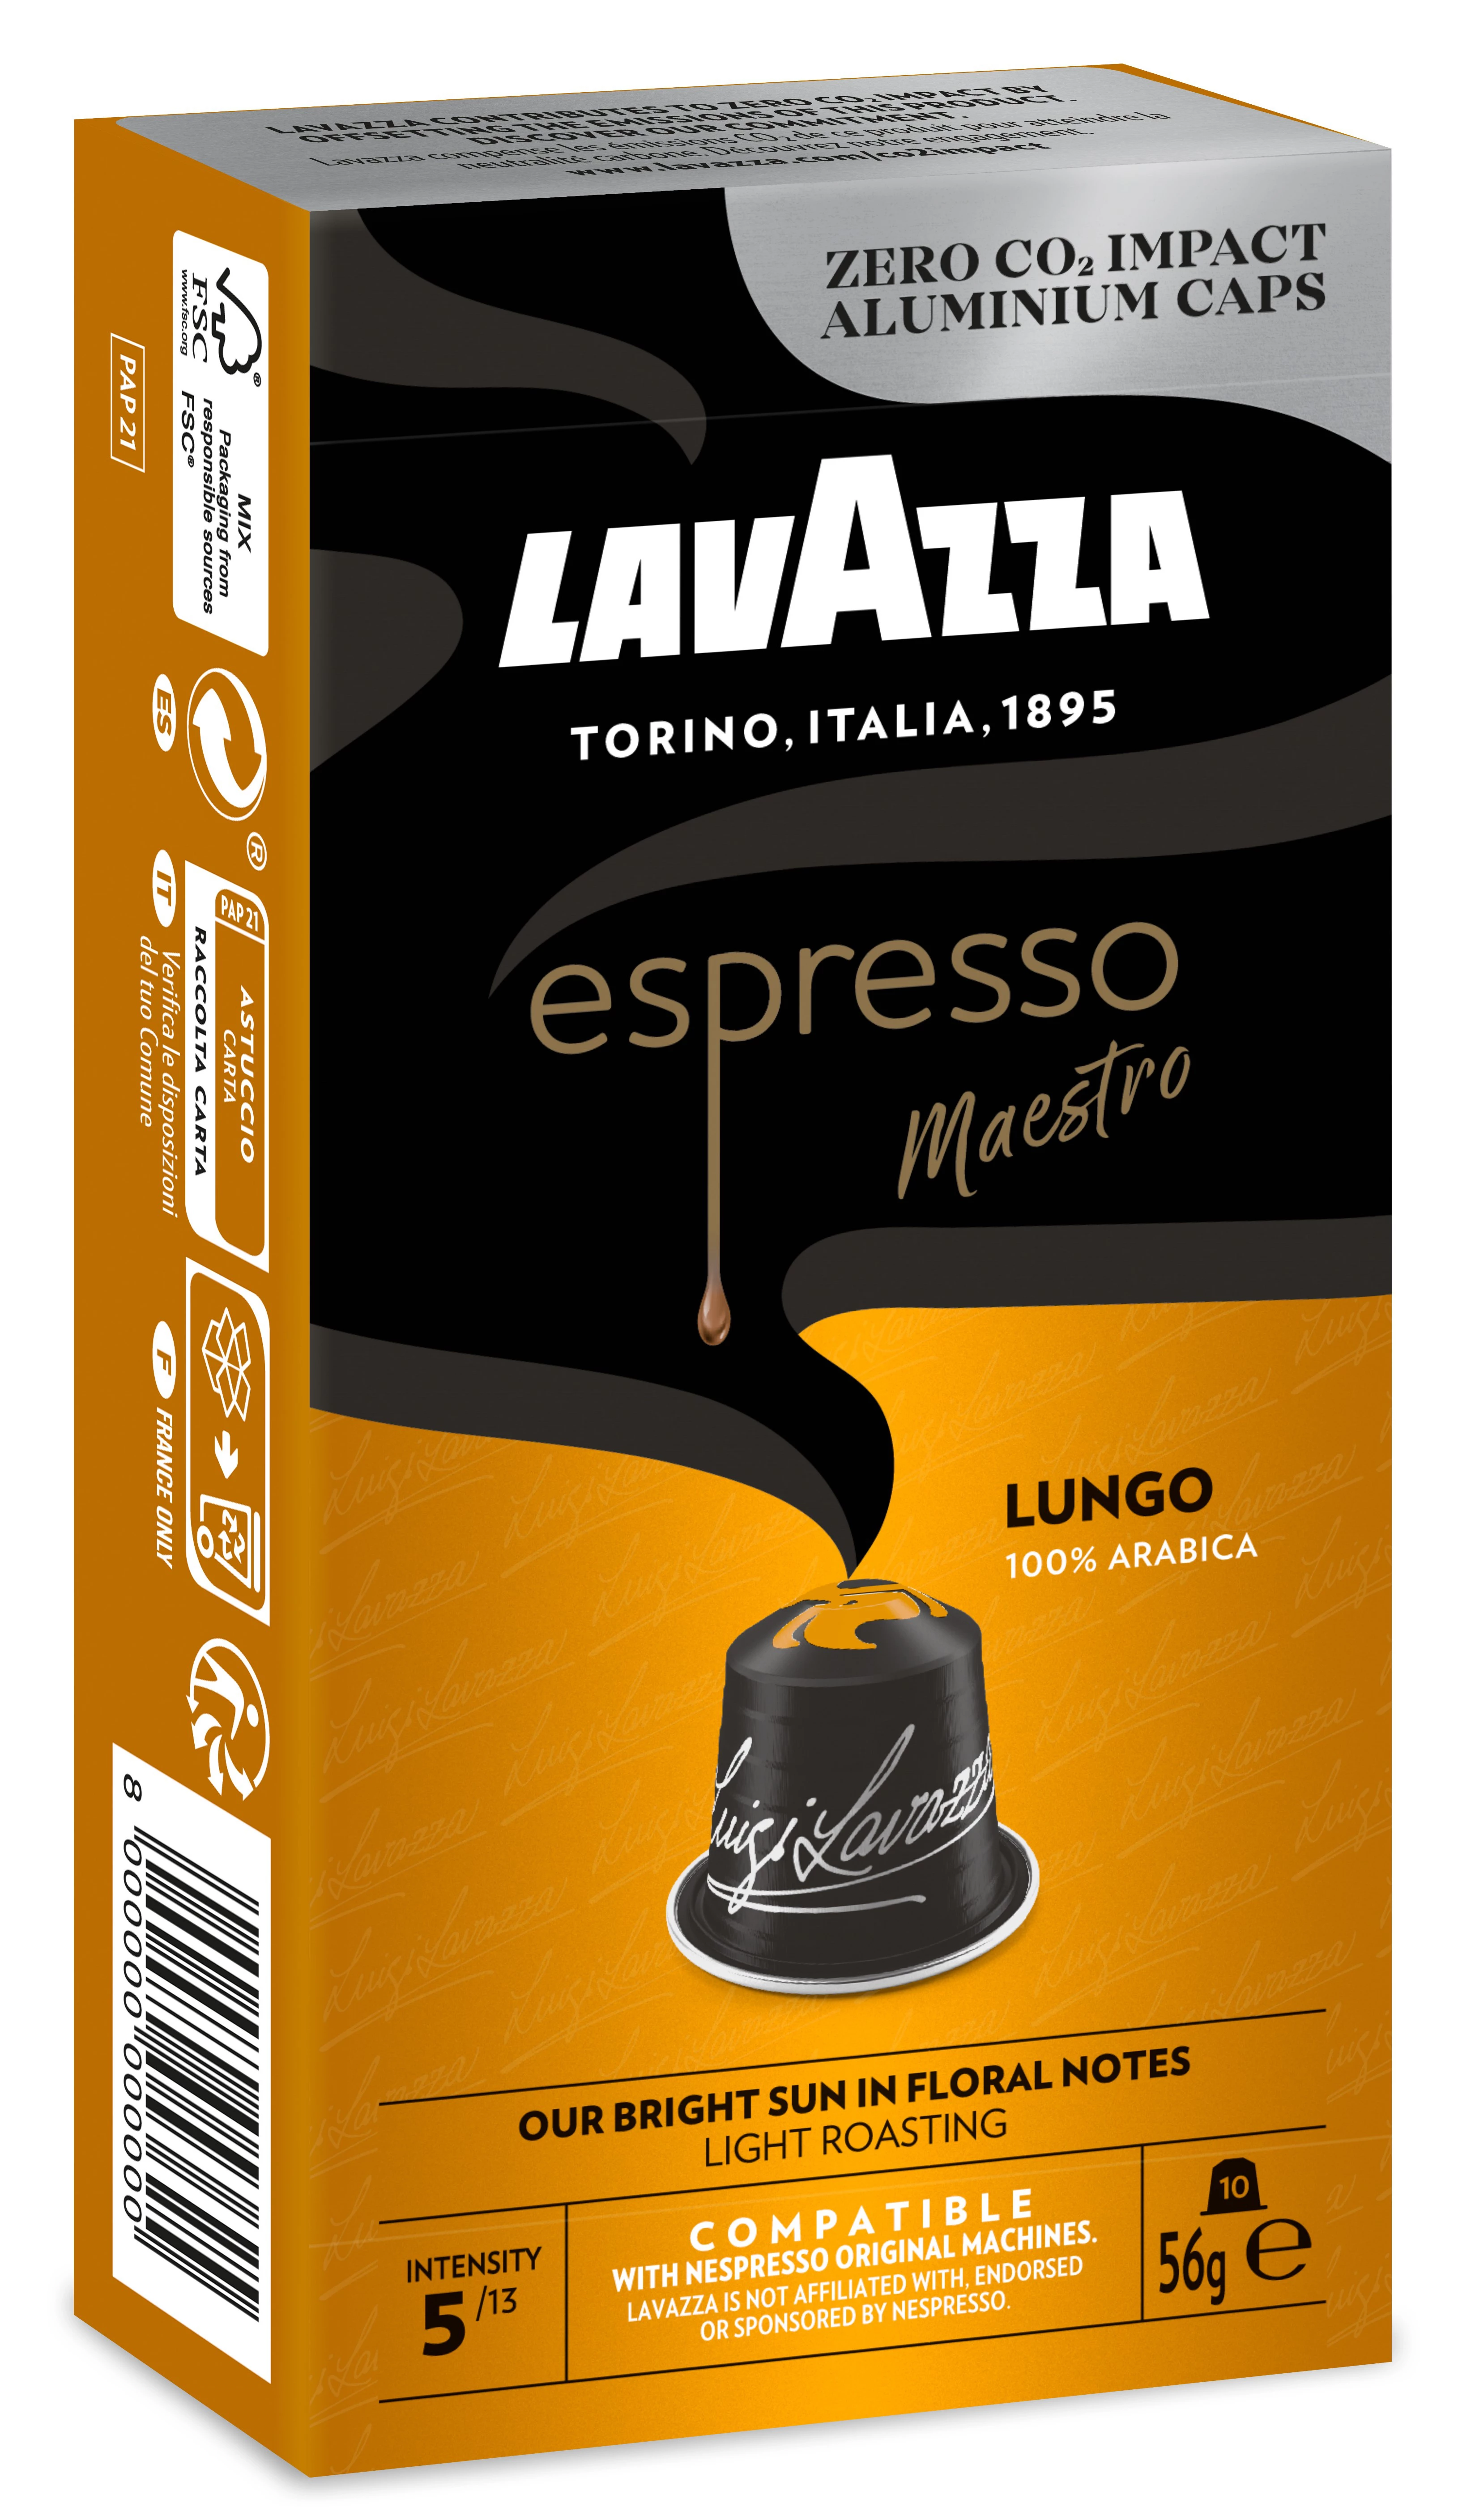 Cápsulas Café Espresso Maestro Lungo Compatibles Nespresso; x10; 56g - LAVAZZA